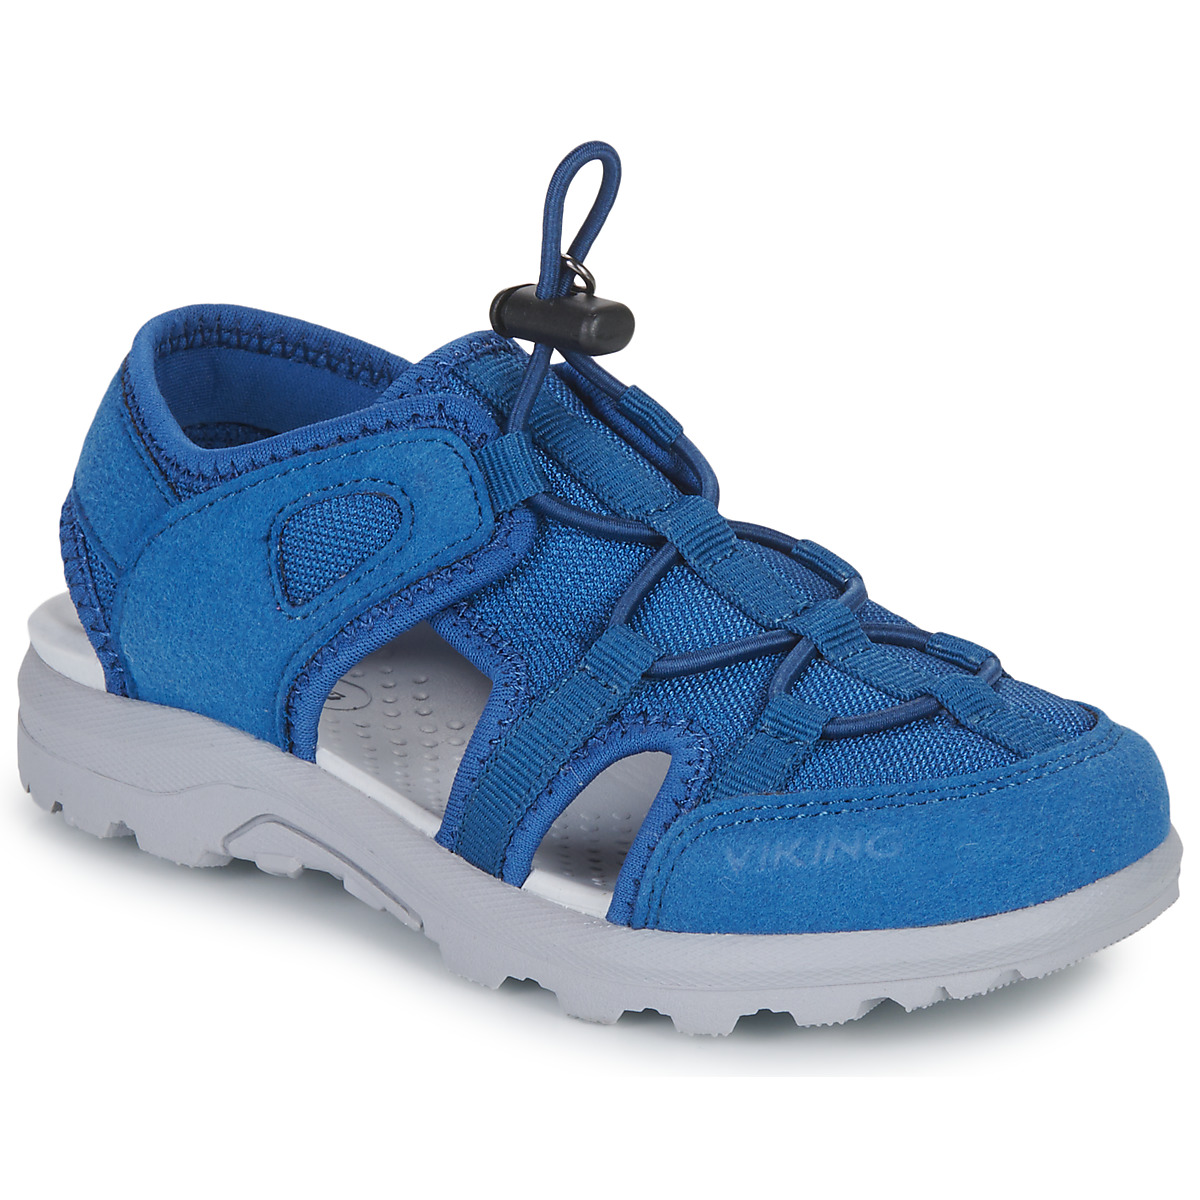 鞋子 儿童 运动凉鞋 VICKING FOOTWEAR Sandvika 蓝色